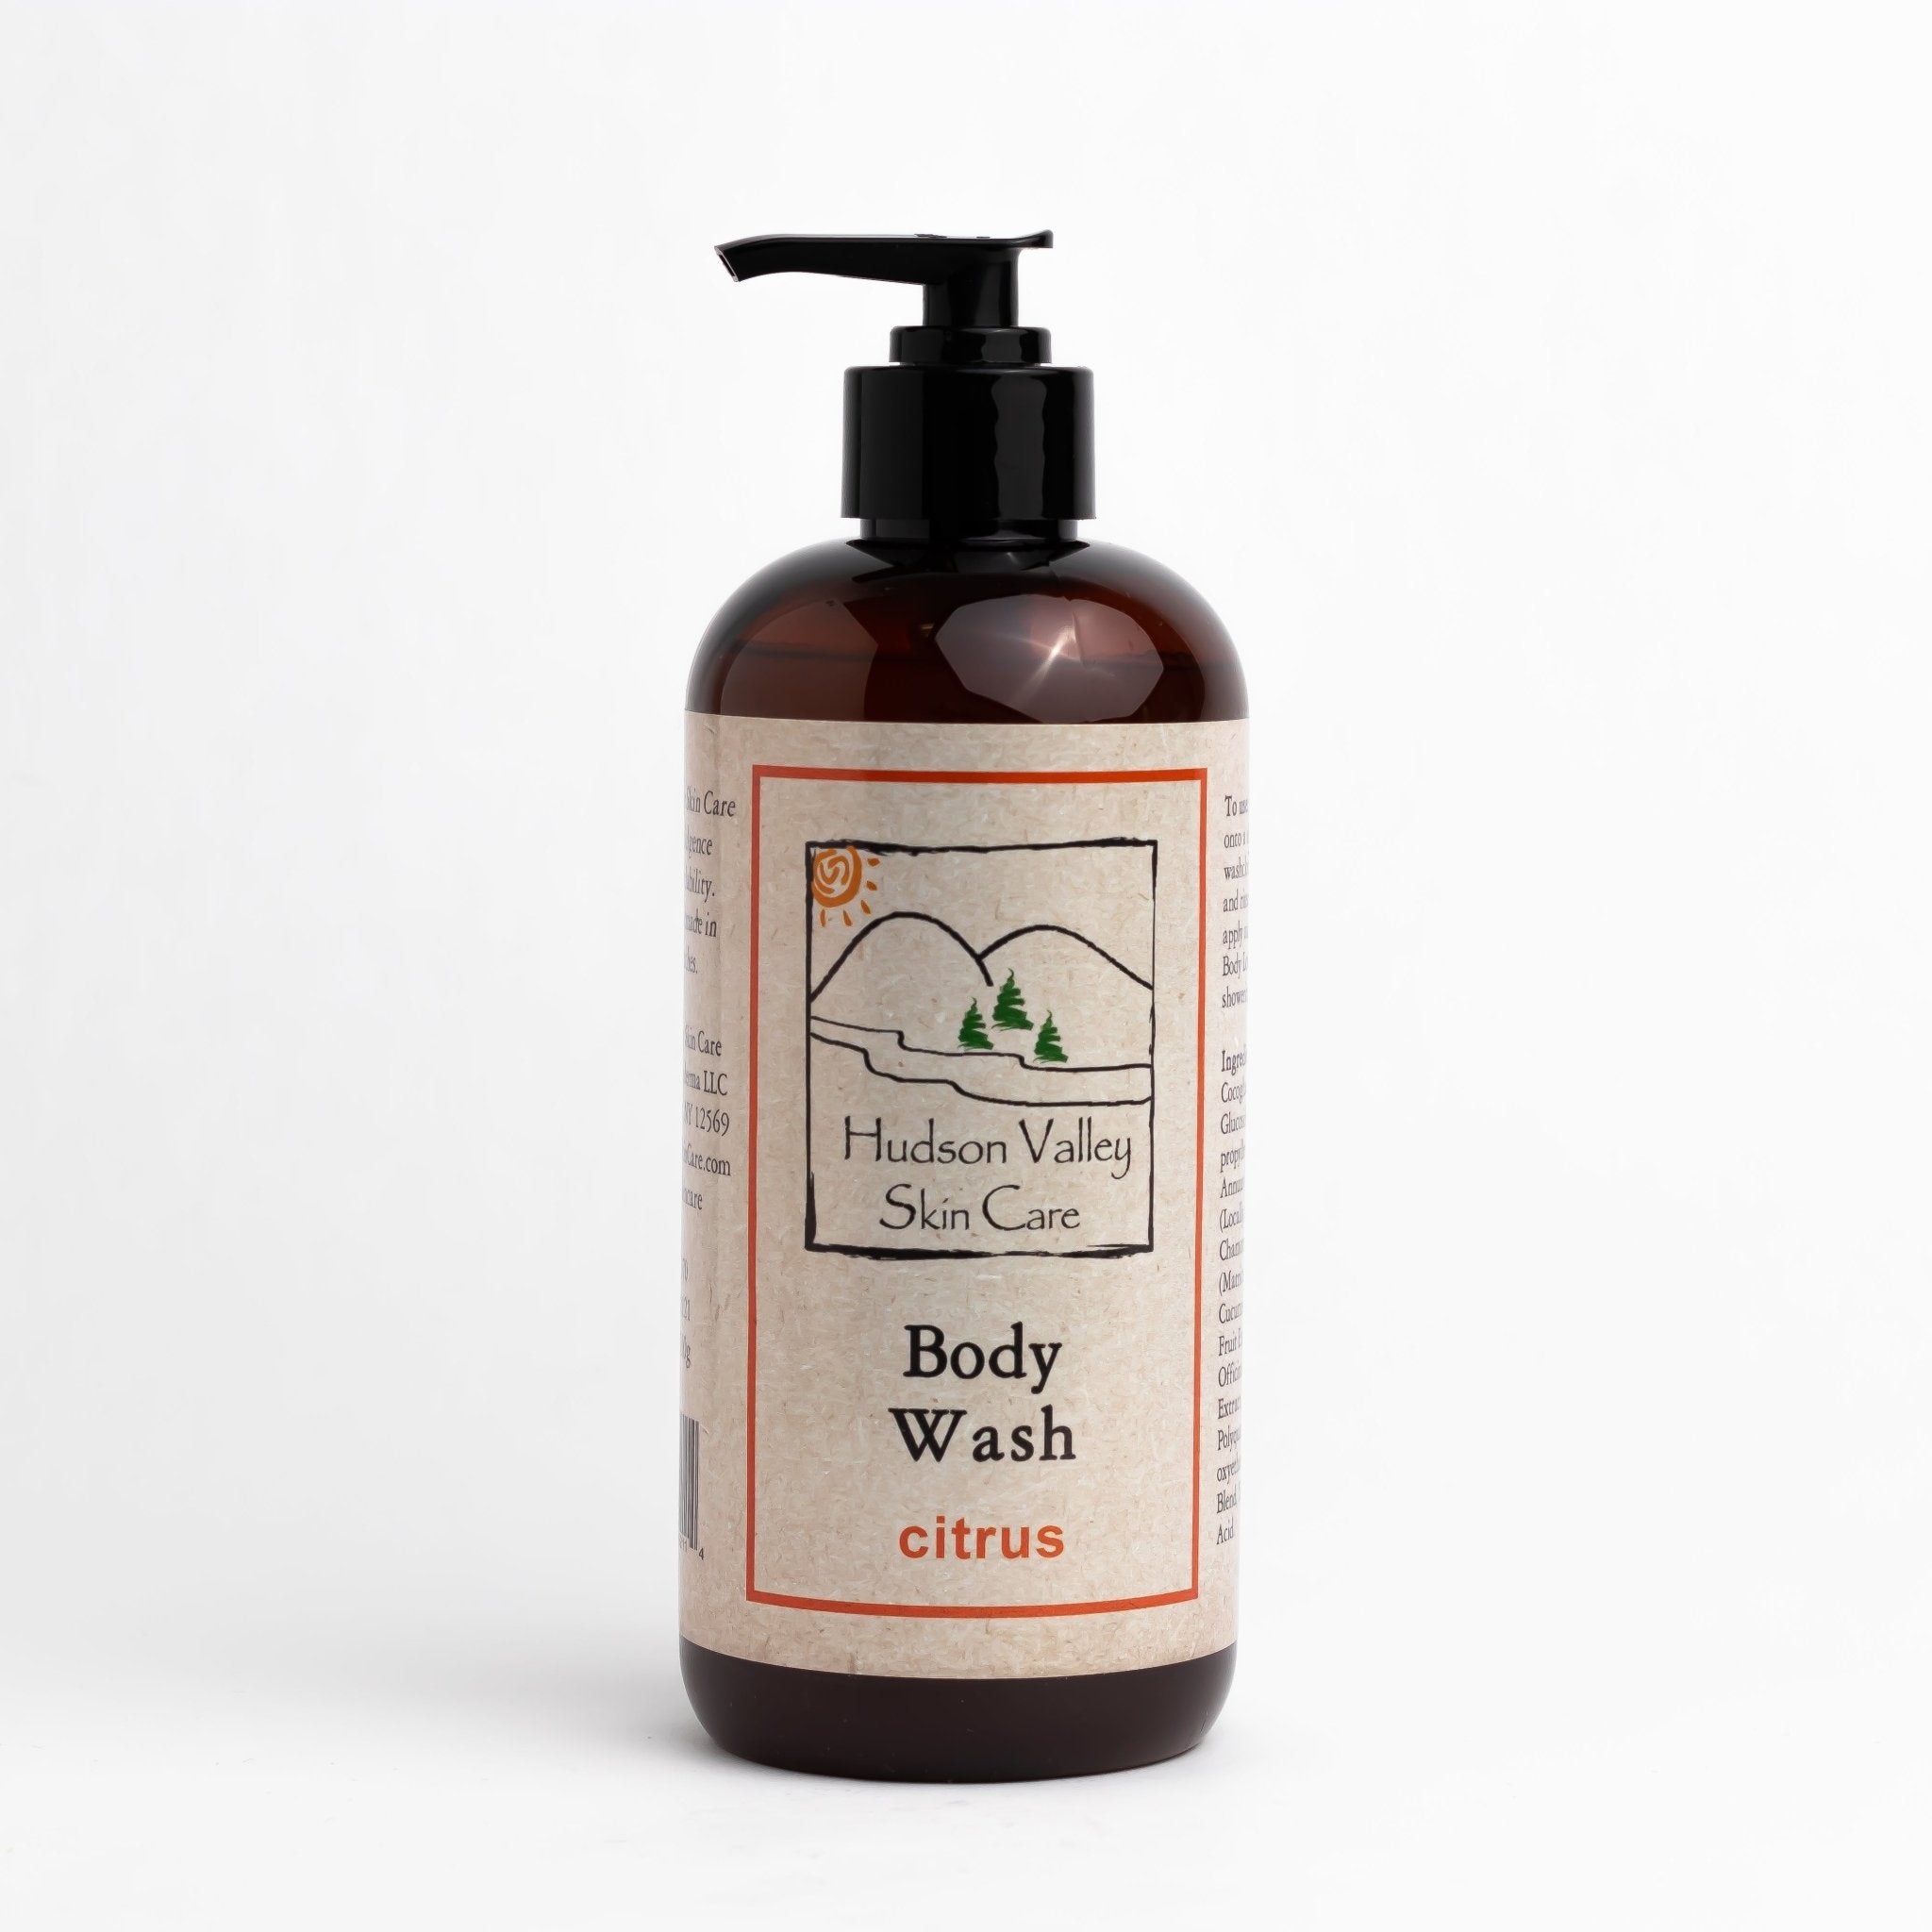 Citrus Body Wash - Hudson Valley Skin Care